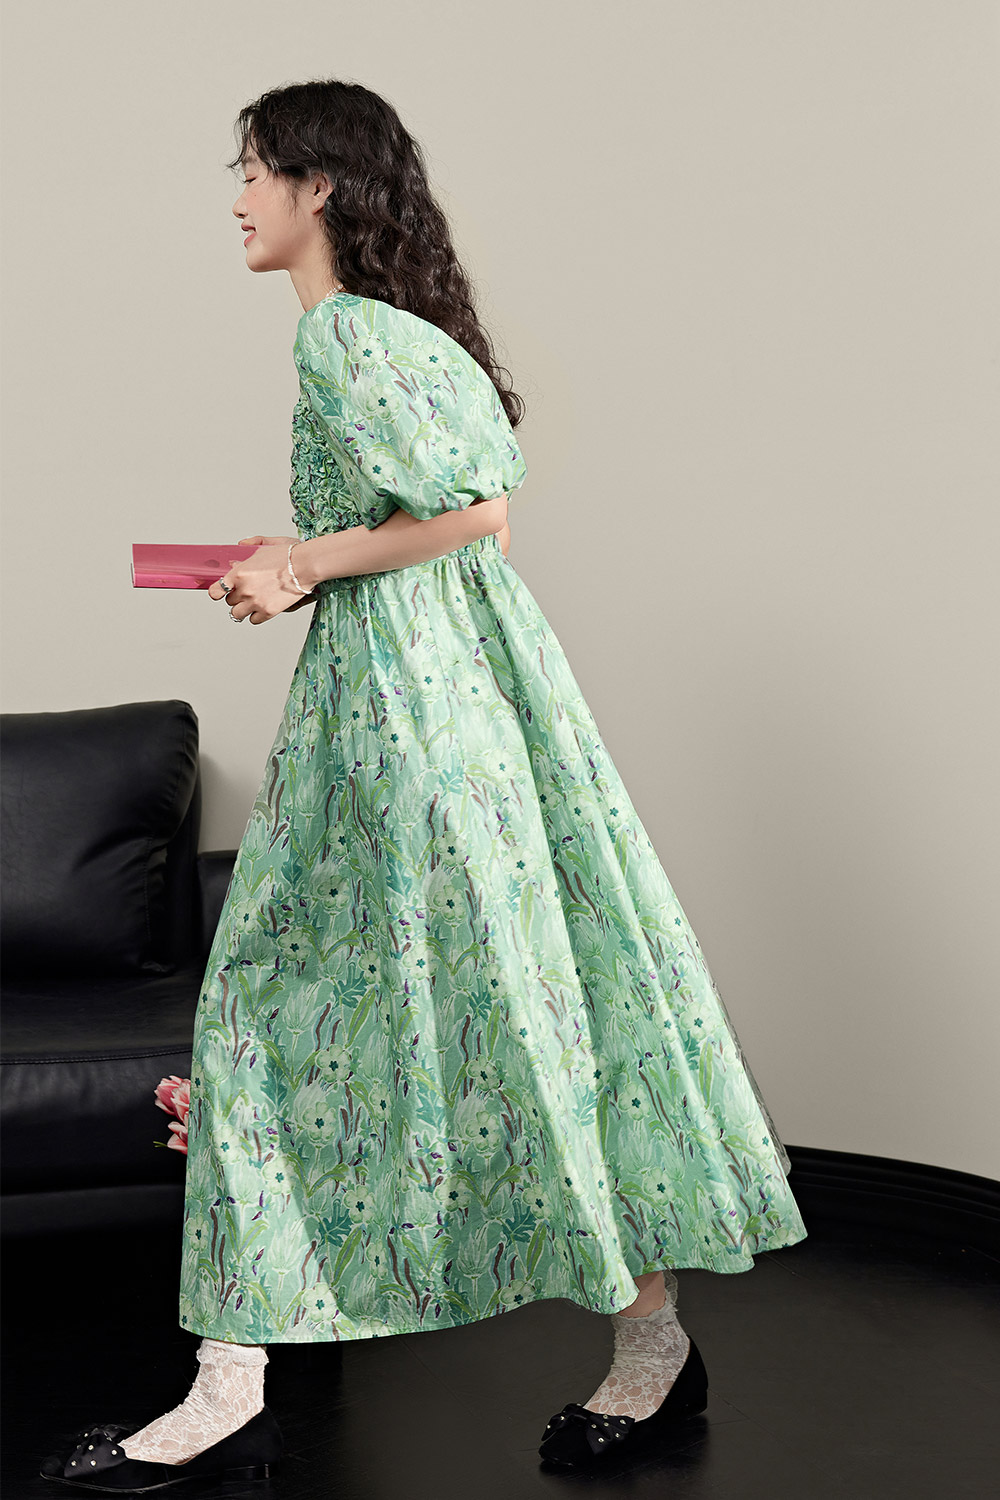 Floral teaparty dress